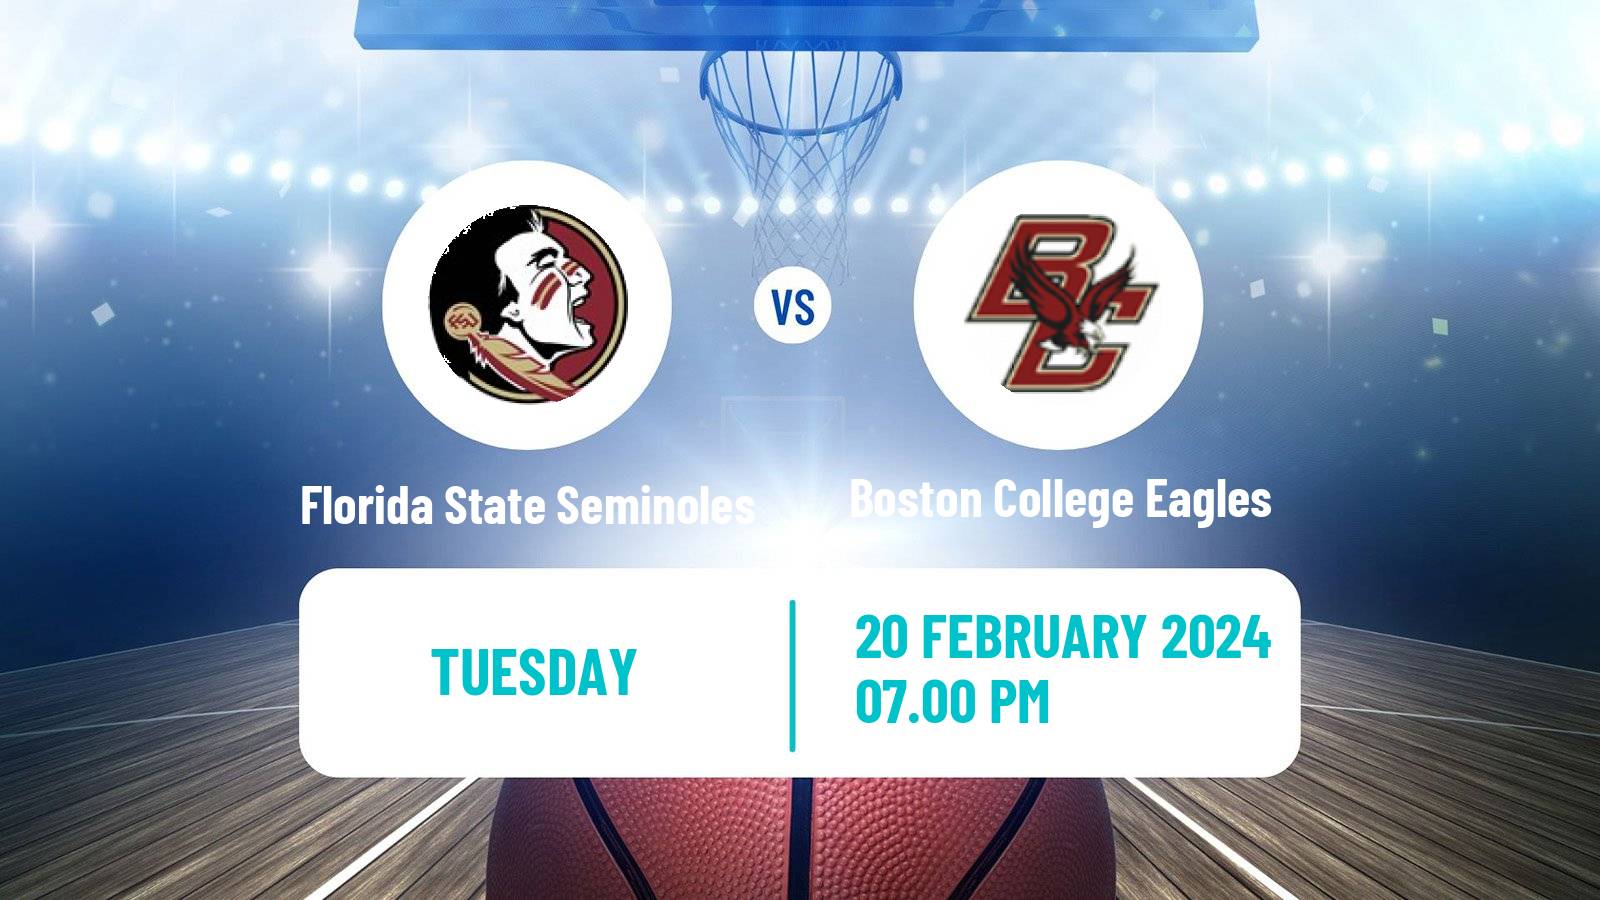 Basketball NCAA College Basketball Florida State Seminoles - Boston College Eagles